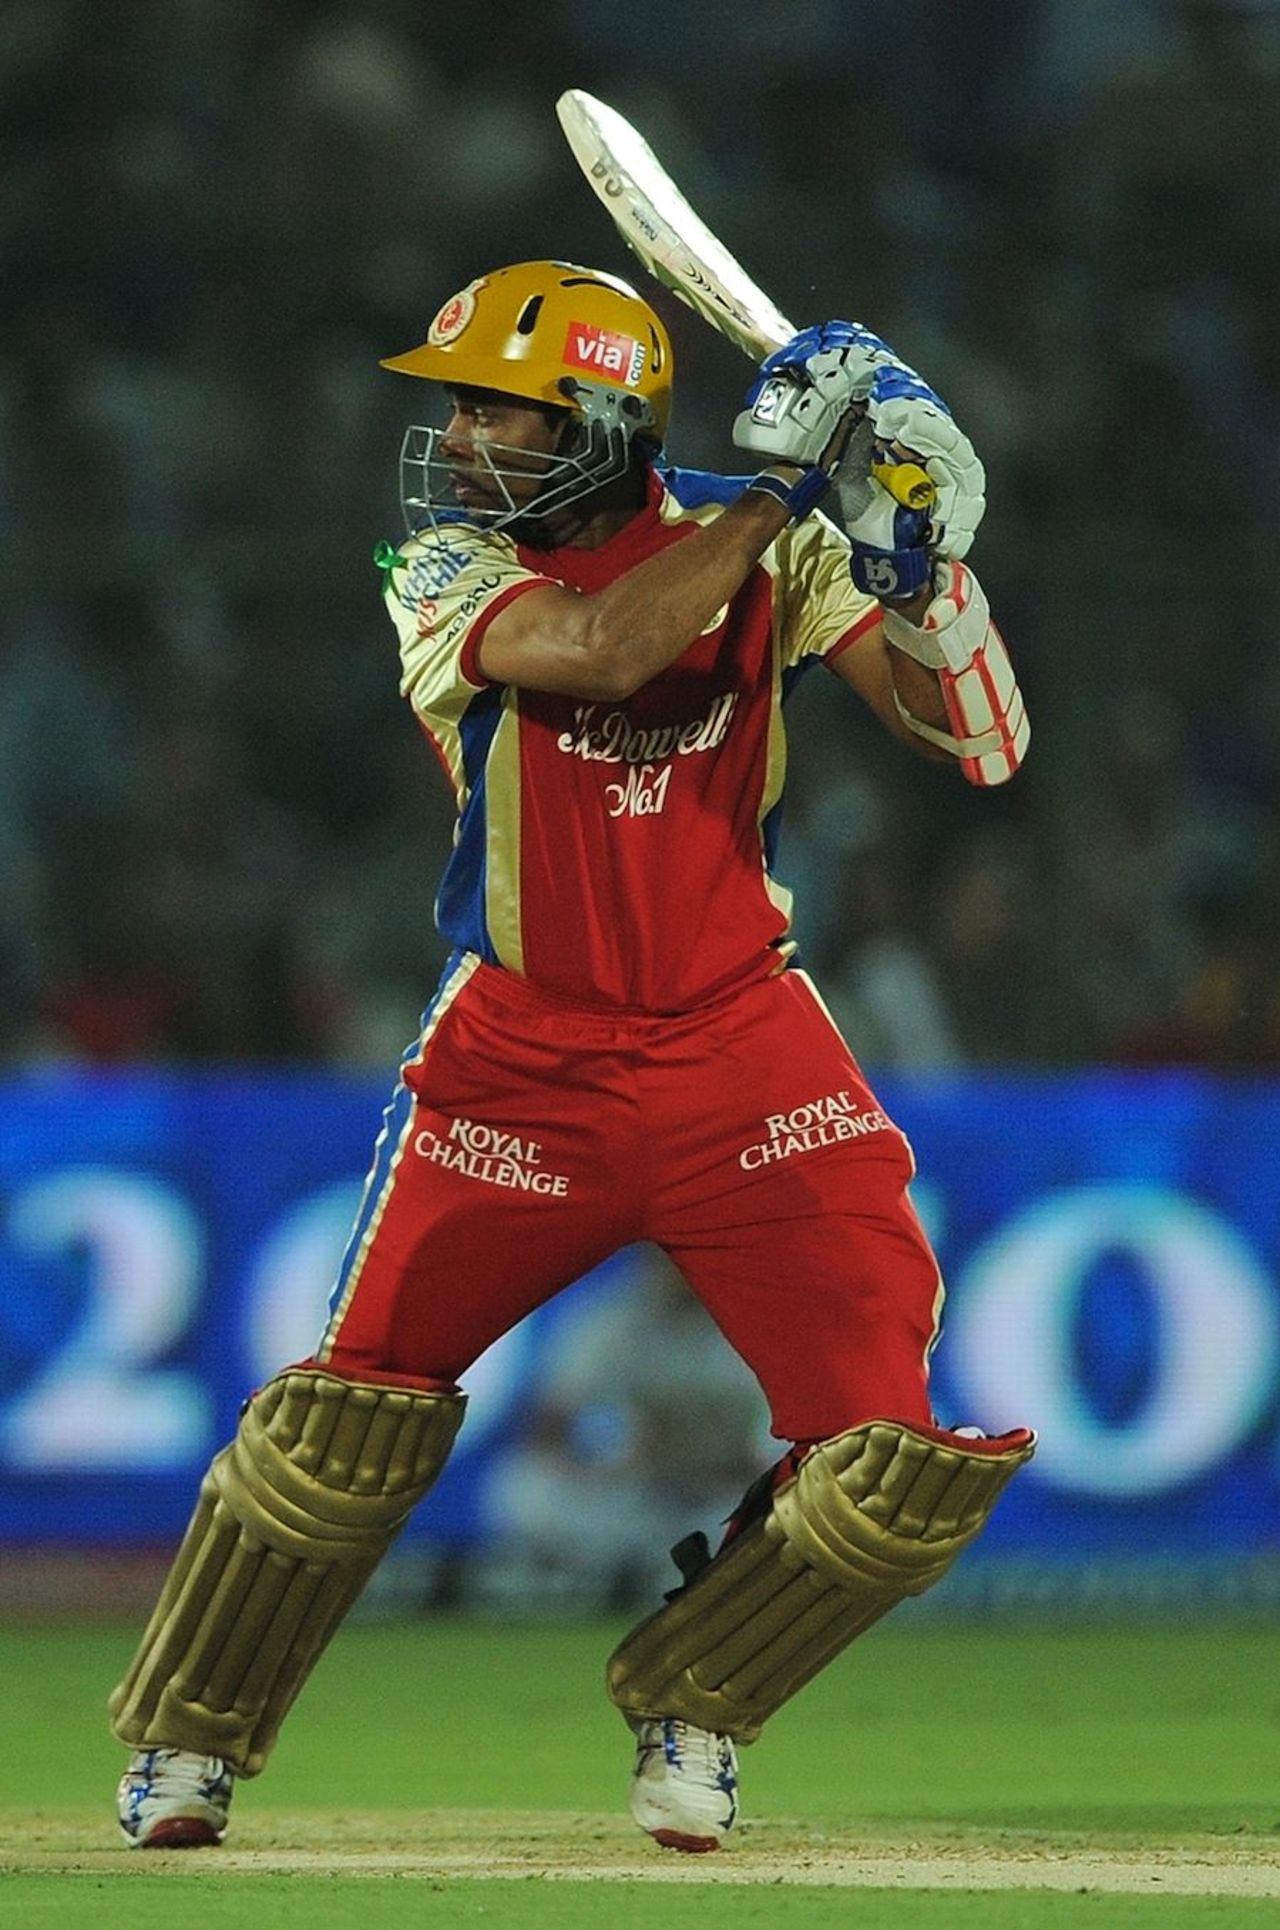 Tillakaratne Dilshan cuts during his steady innings, Rajasthan Royals v Royal Challengers Bangalore, IPL, Jaipur, April 23, 2012